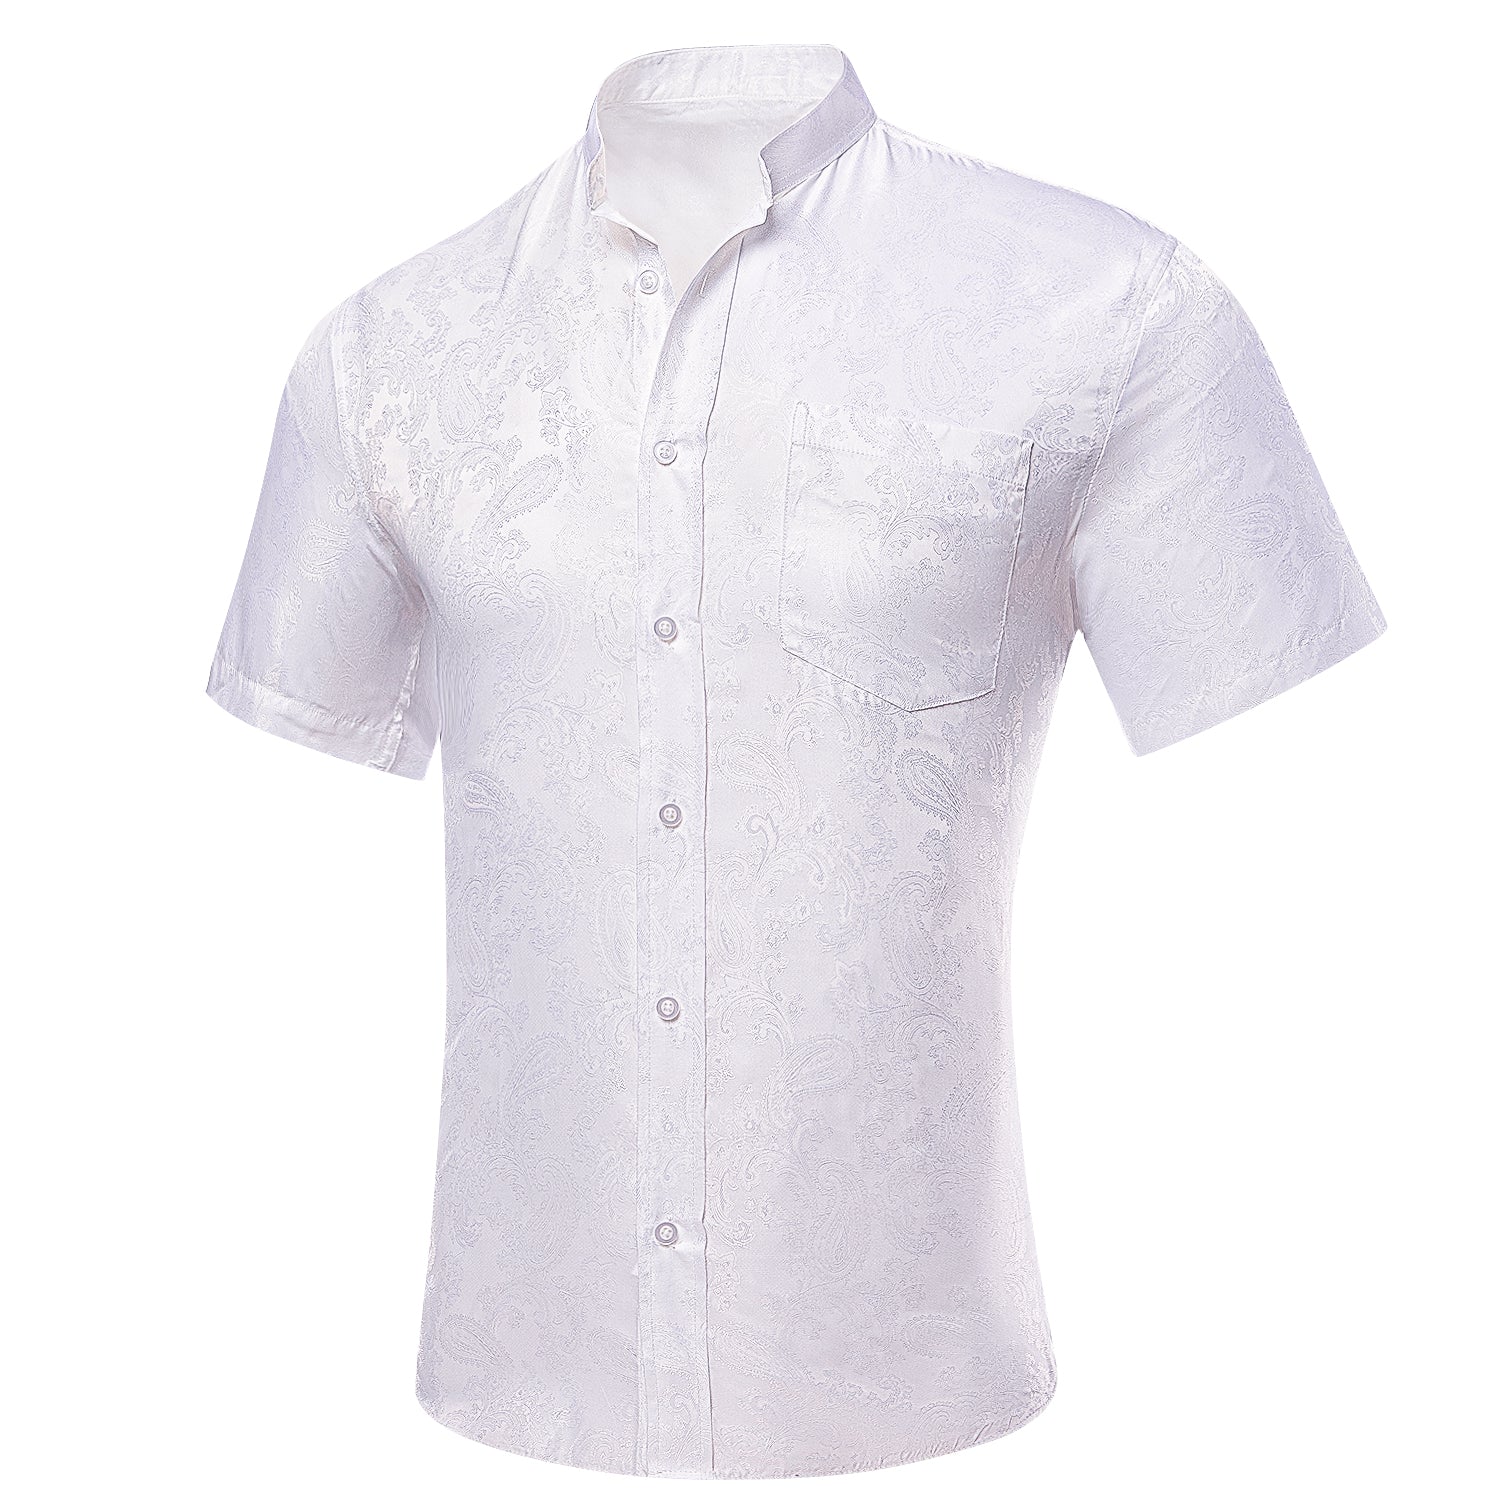 HITIE White Paisley Silk Men's Short Sleeve Shirt